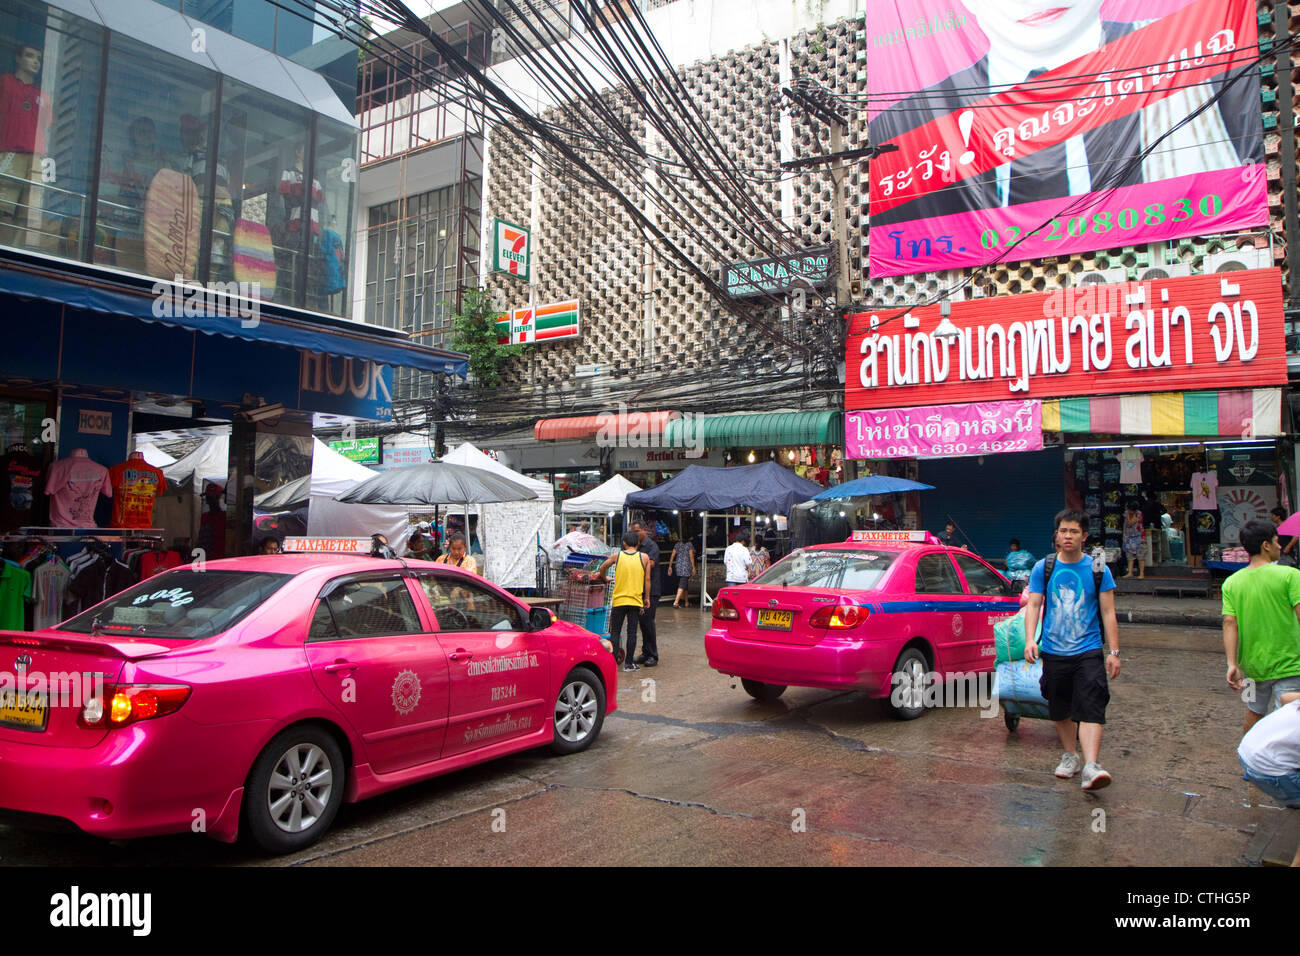 Pink taxi cabs in Bangkok, Thailand. Stock Photo